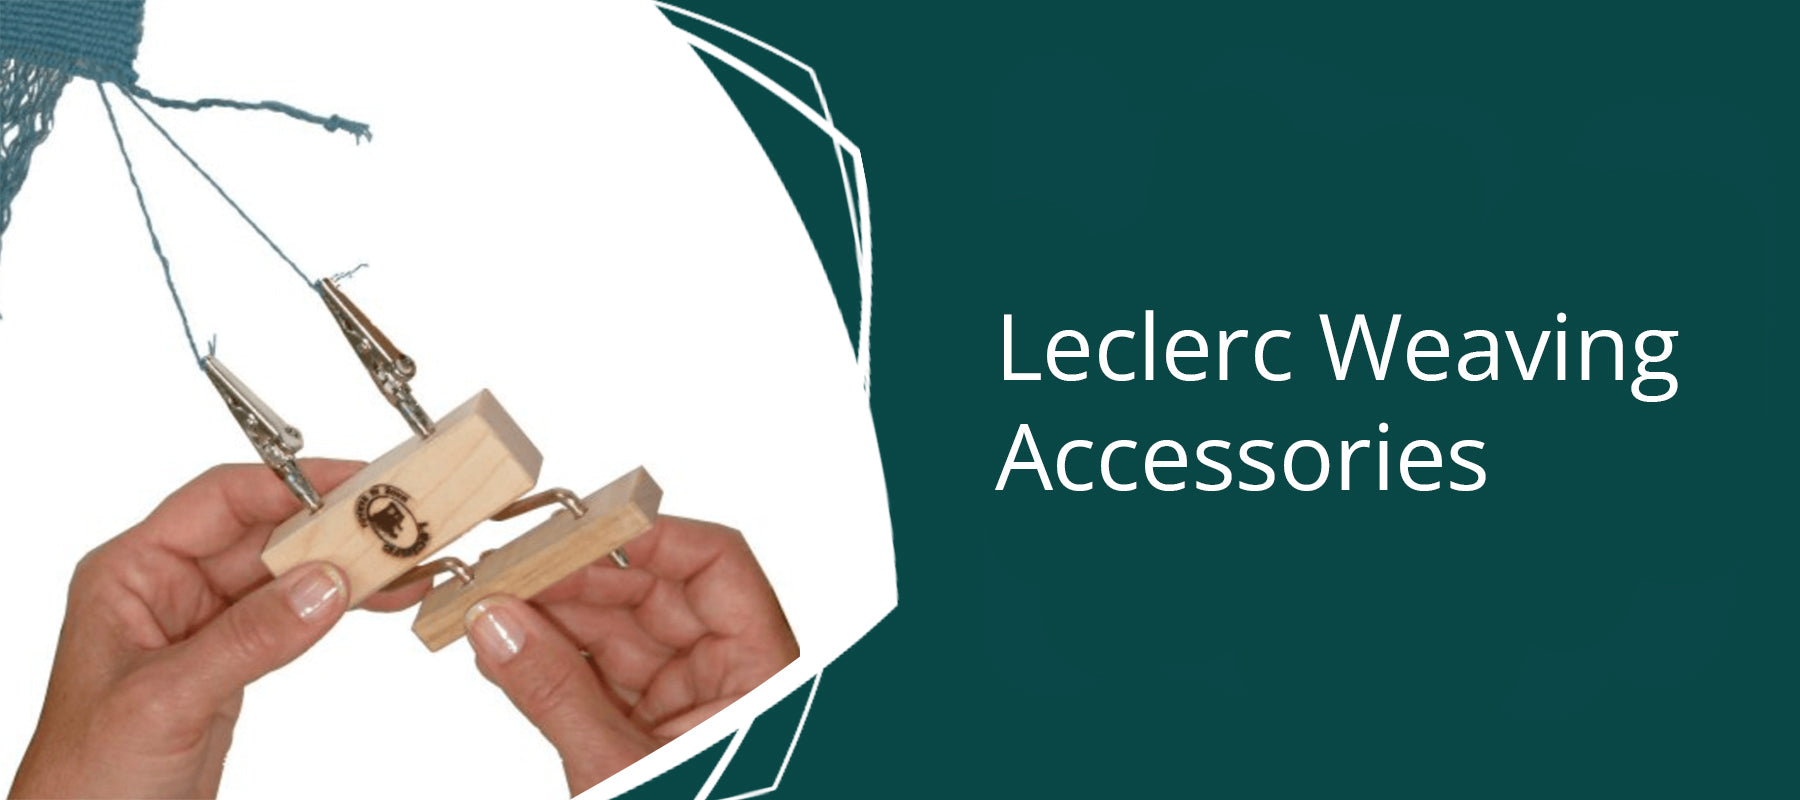 Leclerc Weaving Accessories - Thread Collective Australia 